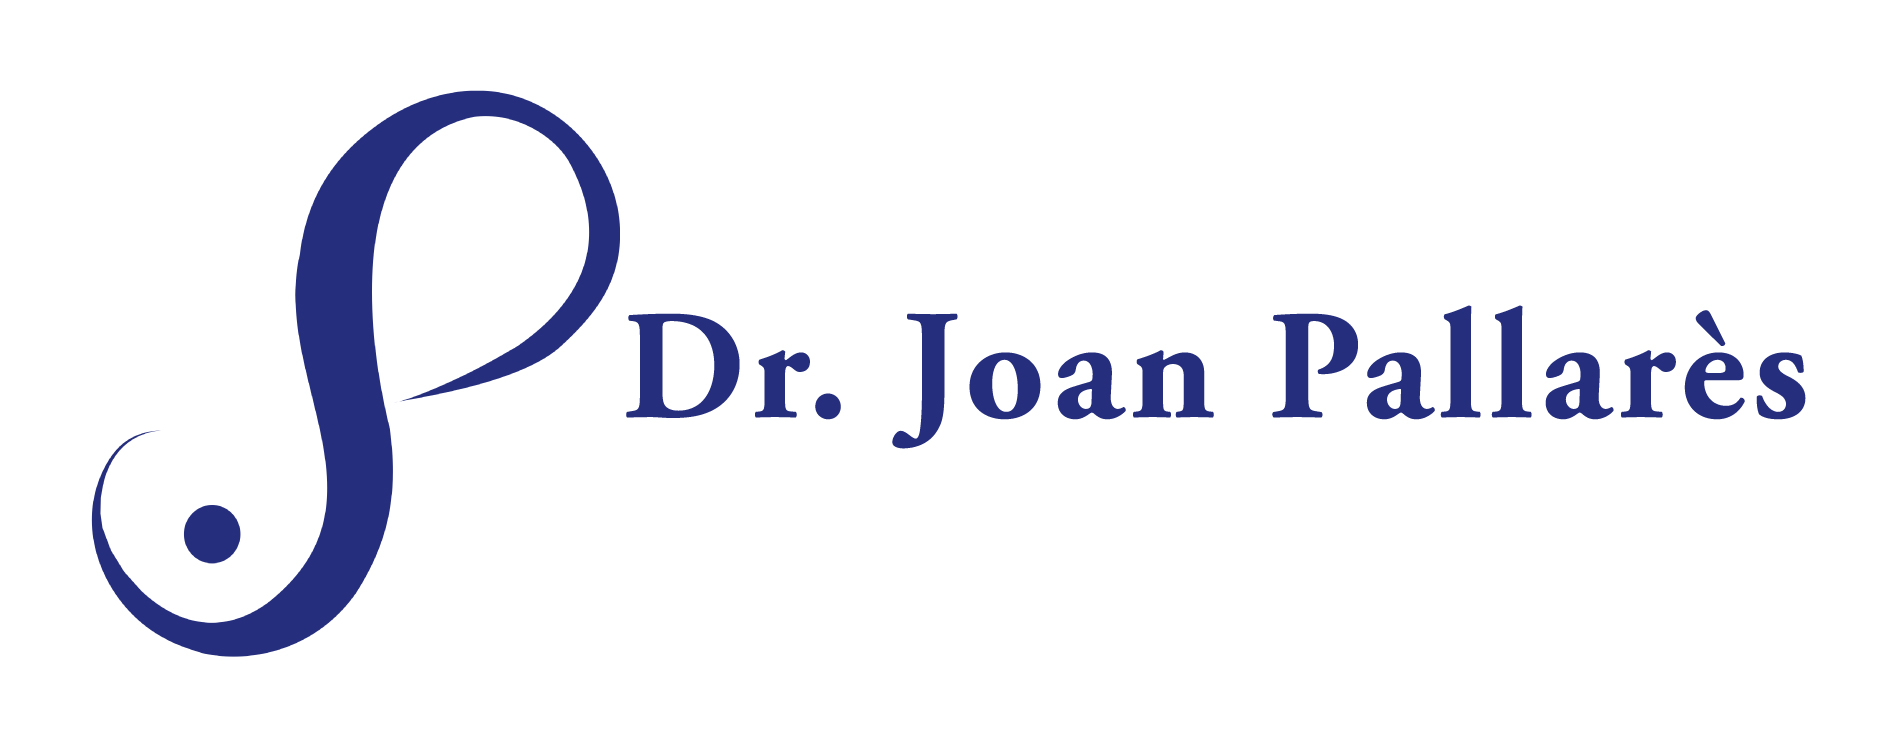 Dr. Joan Pallares